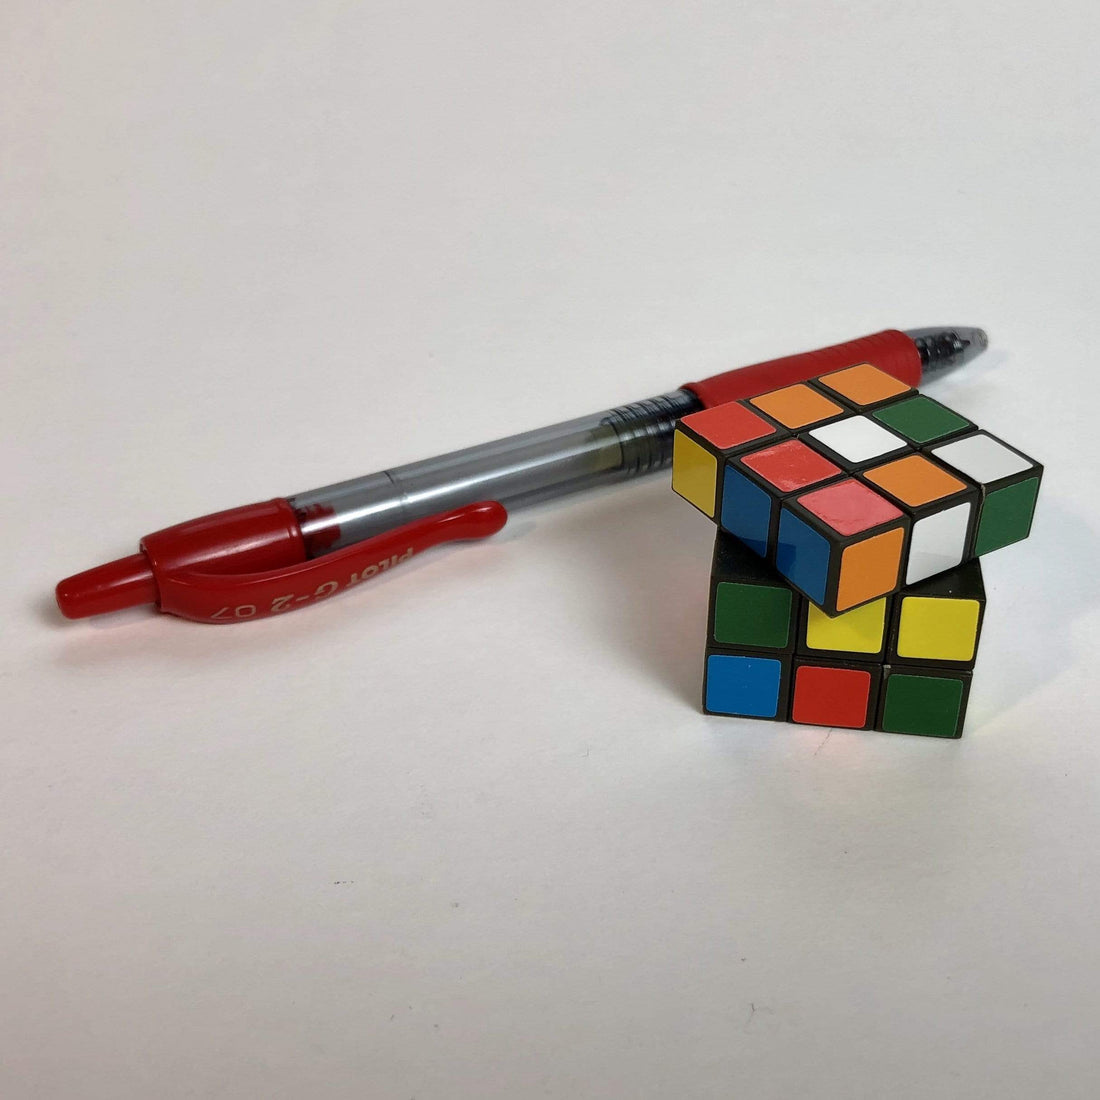 Mini Rubiks Cubes - Buy in Bulk Making Mosaic Art